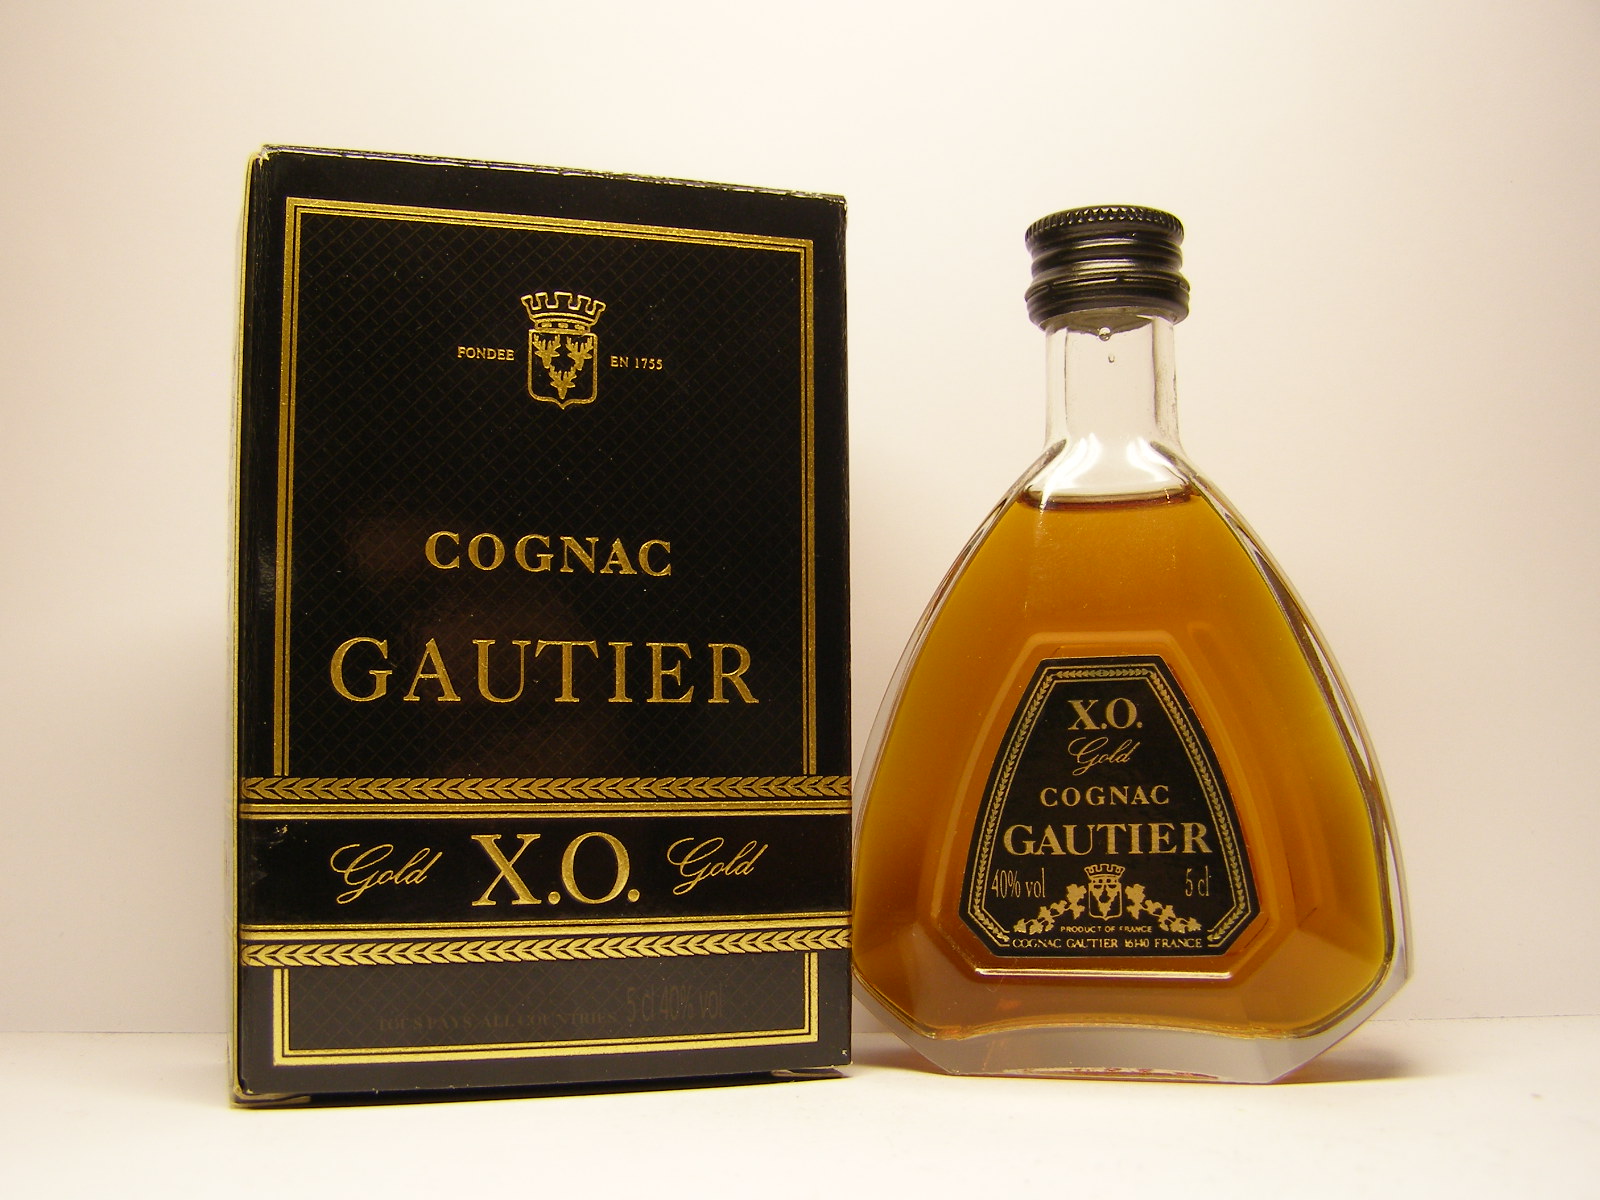 X.O. Gold Cognac